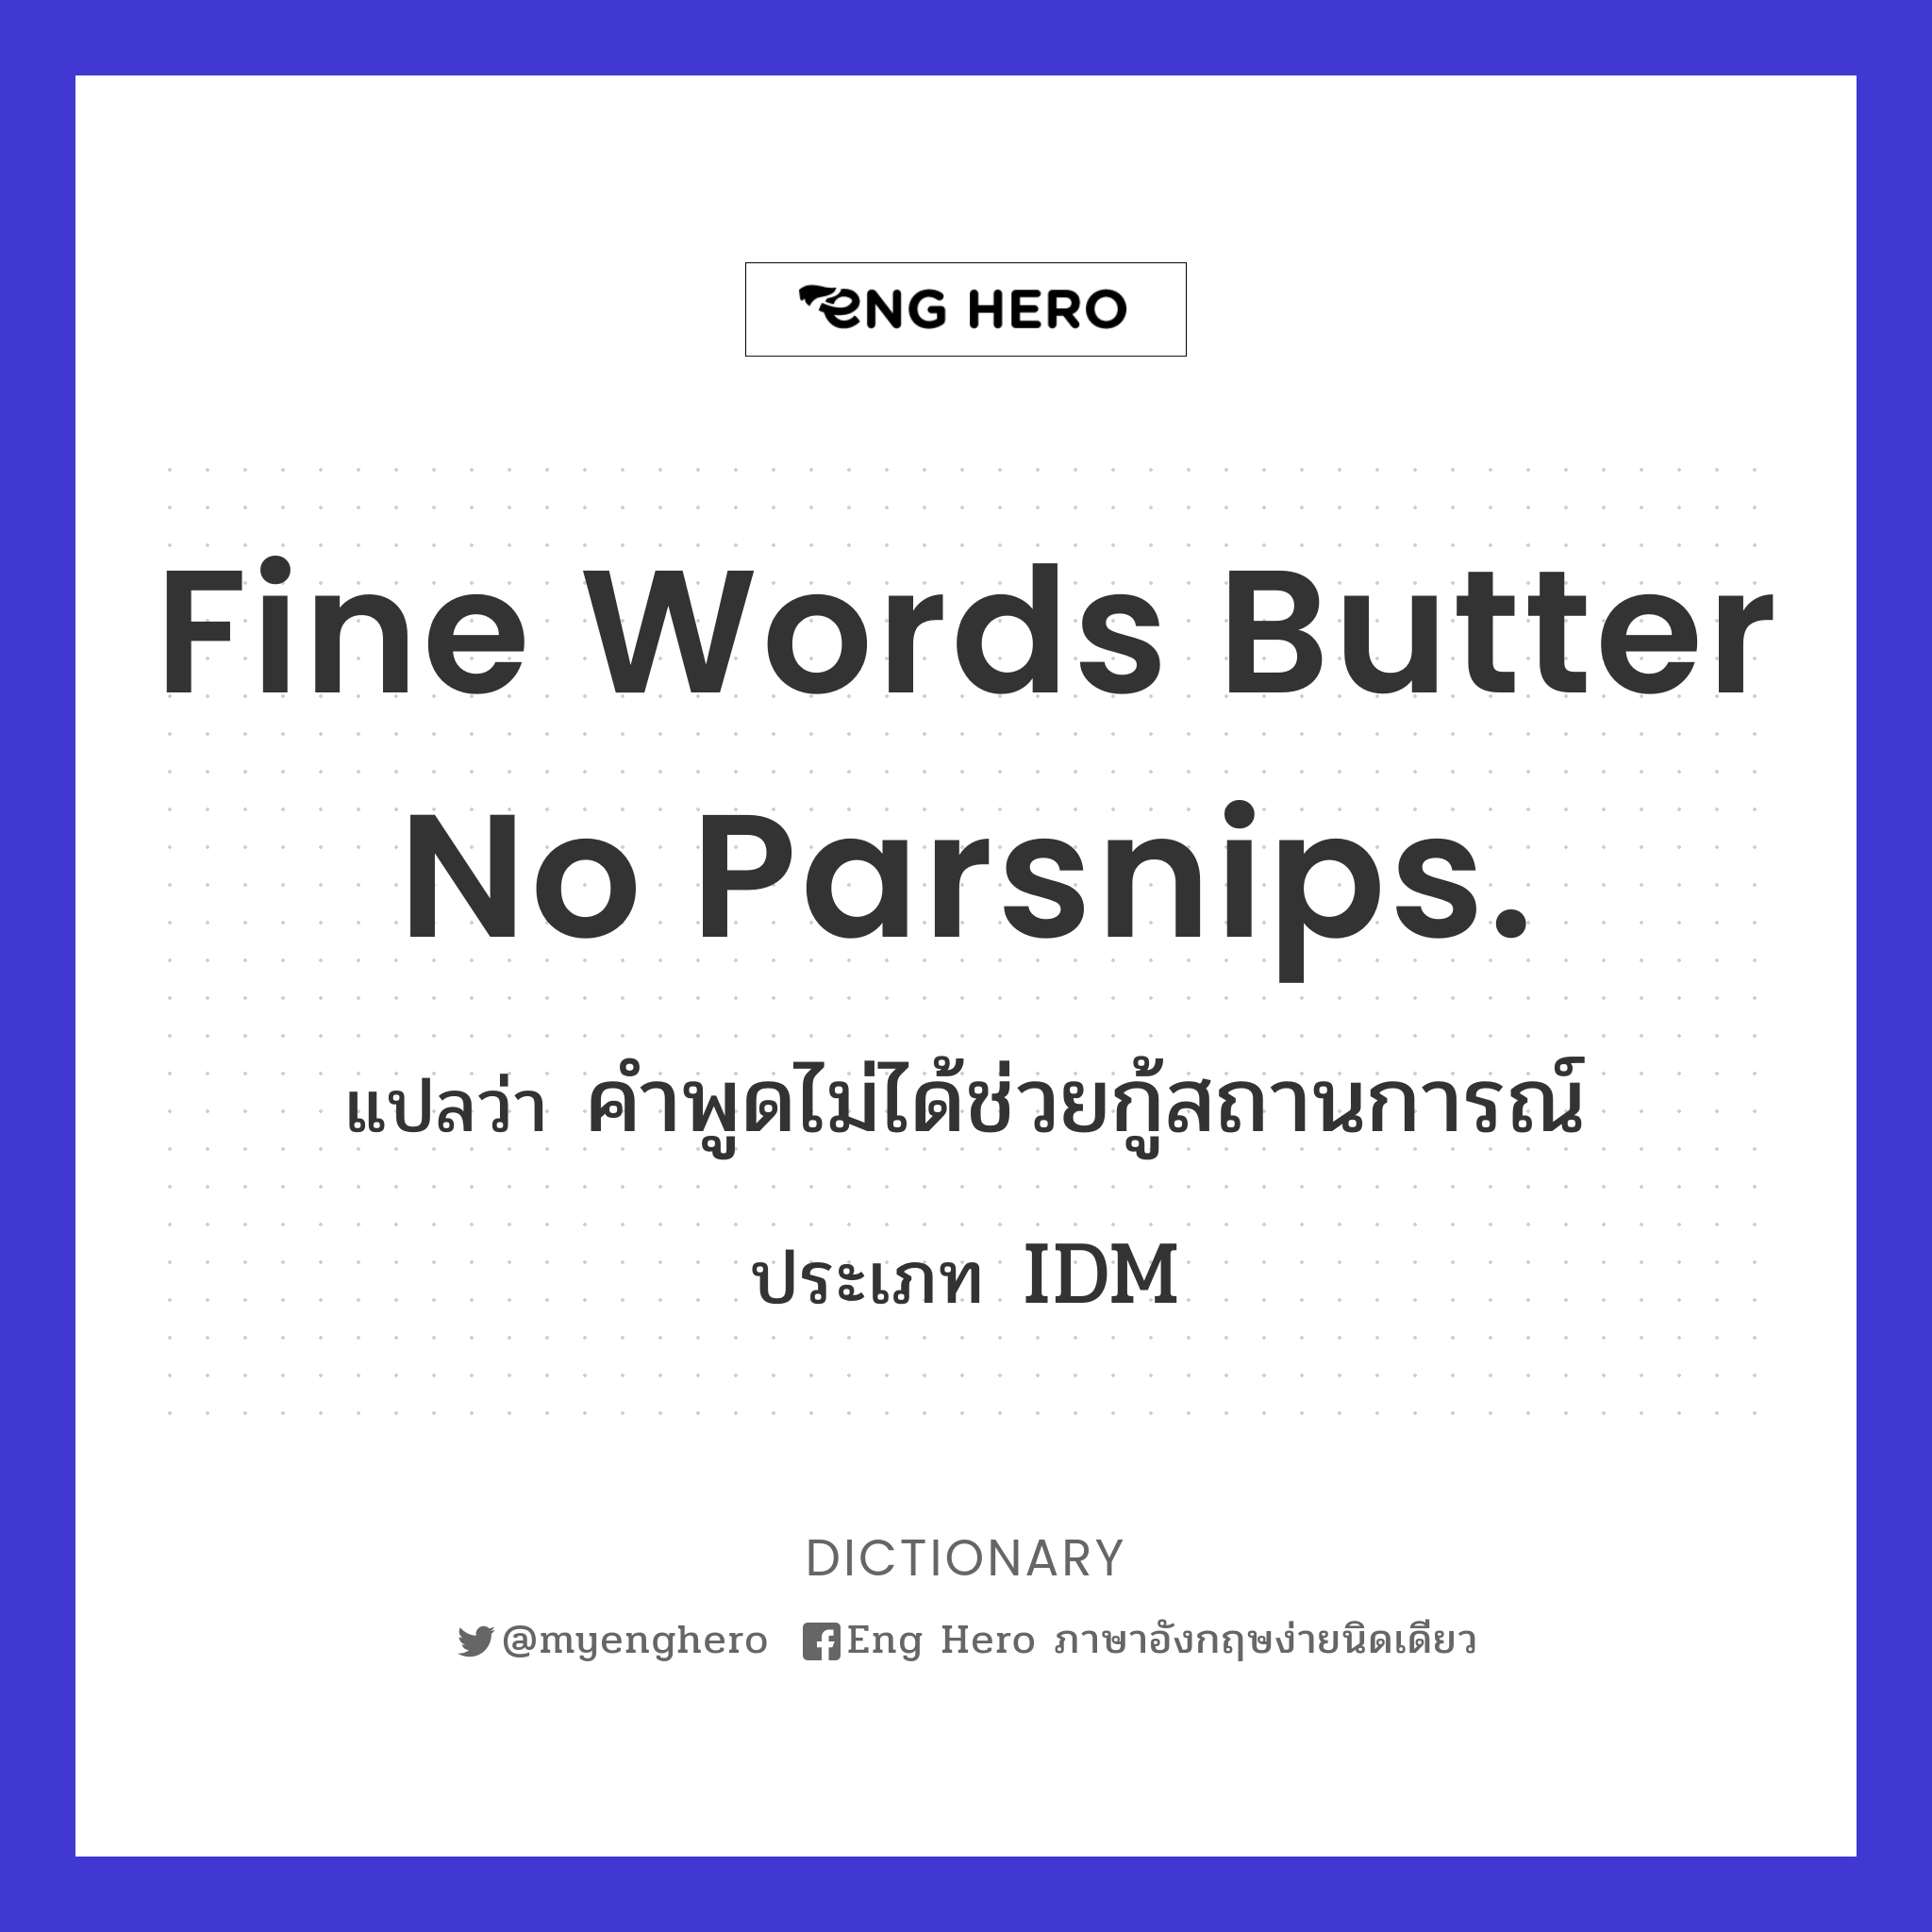 Fine words butter no parsnips.